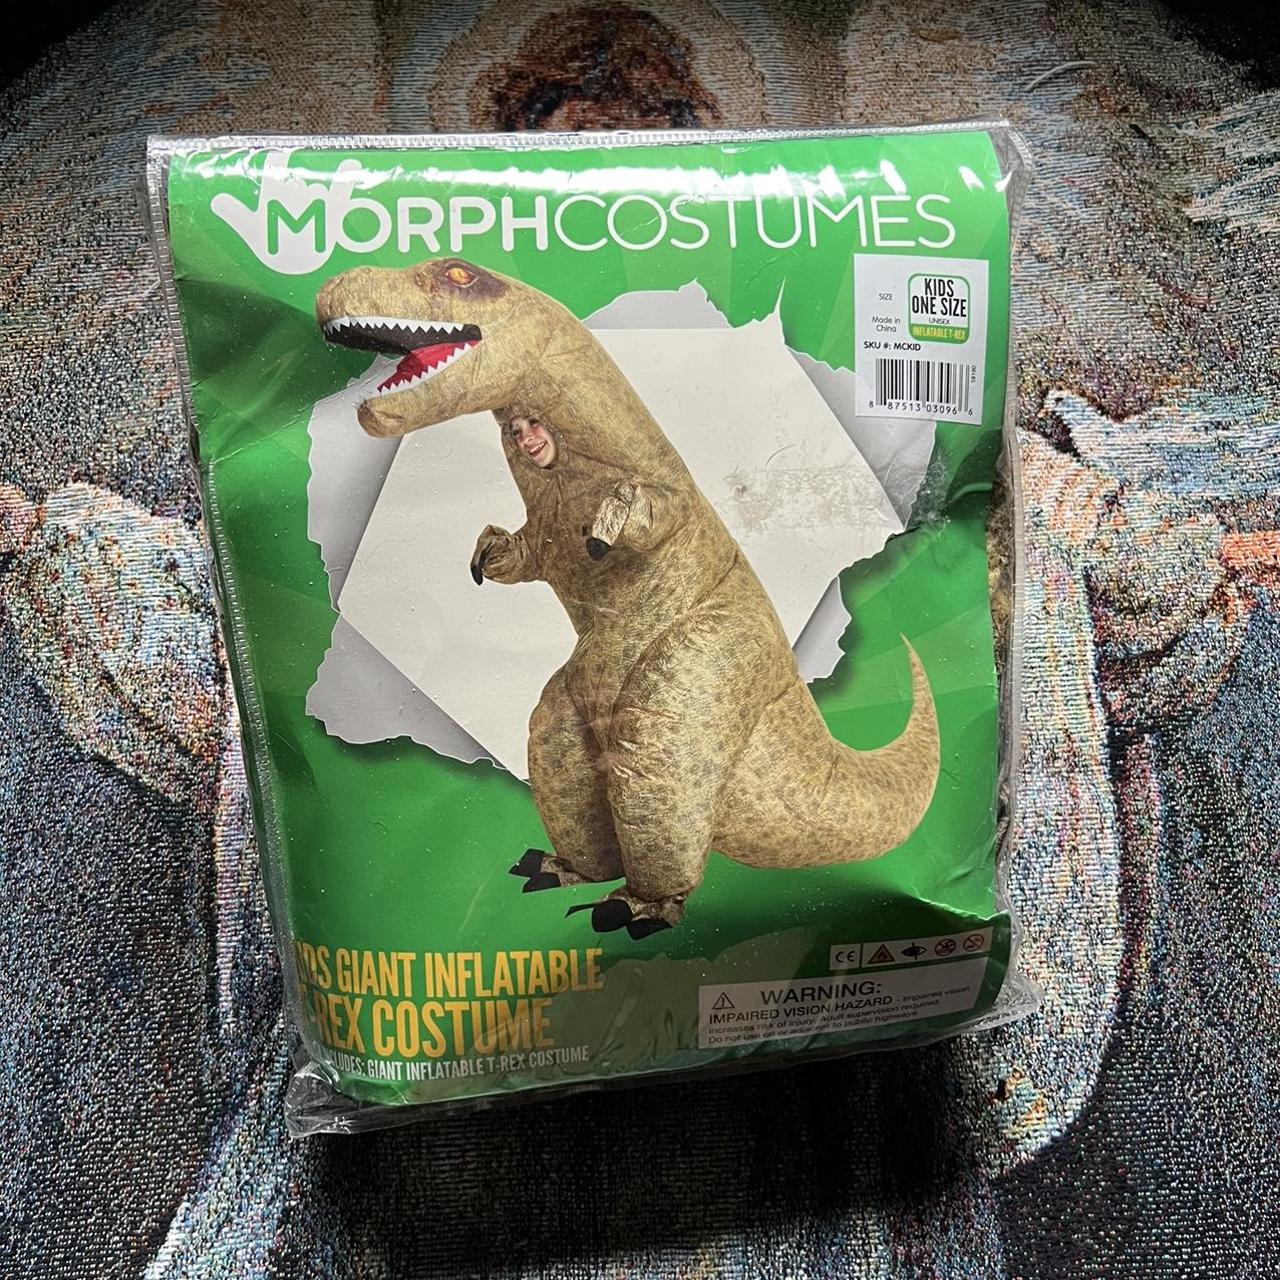 Kids' Green Morphsuit Halloween Costume, Assorted Sizes